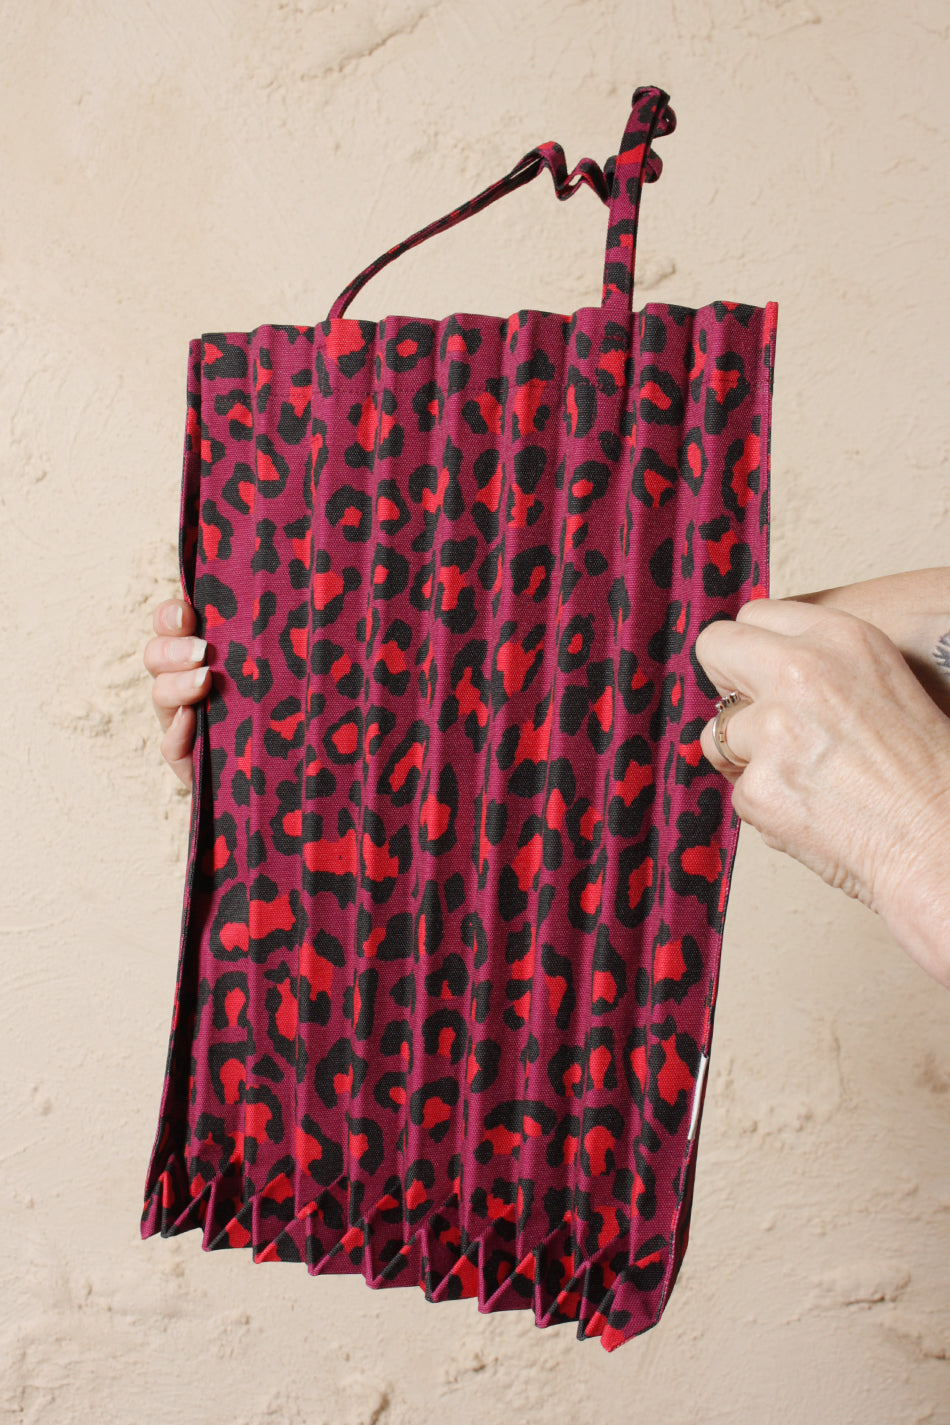 Leopard Printed Bag Pink